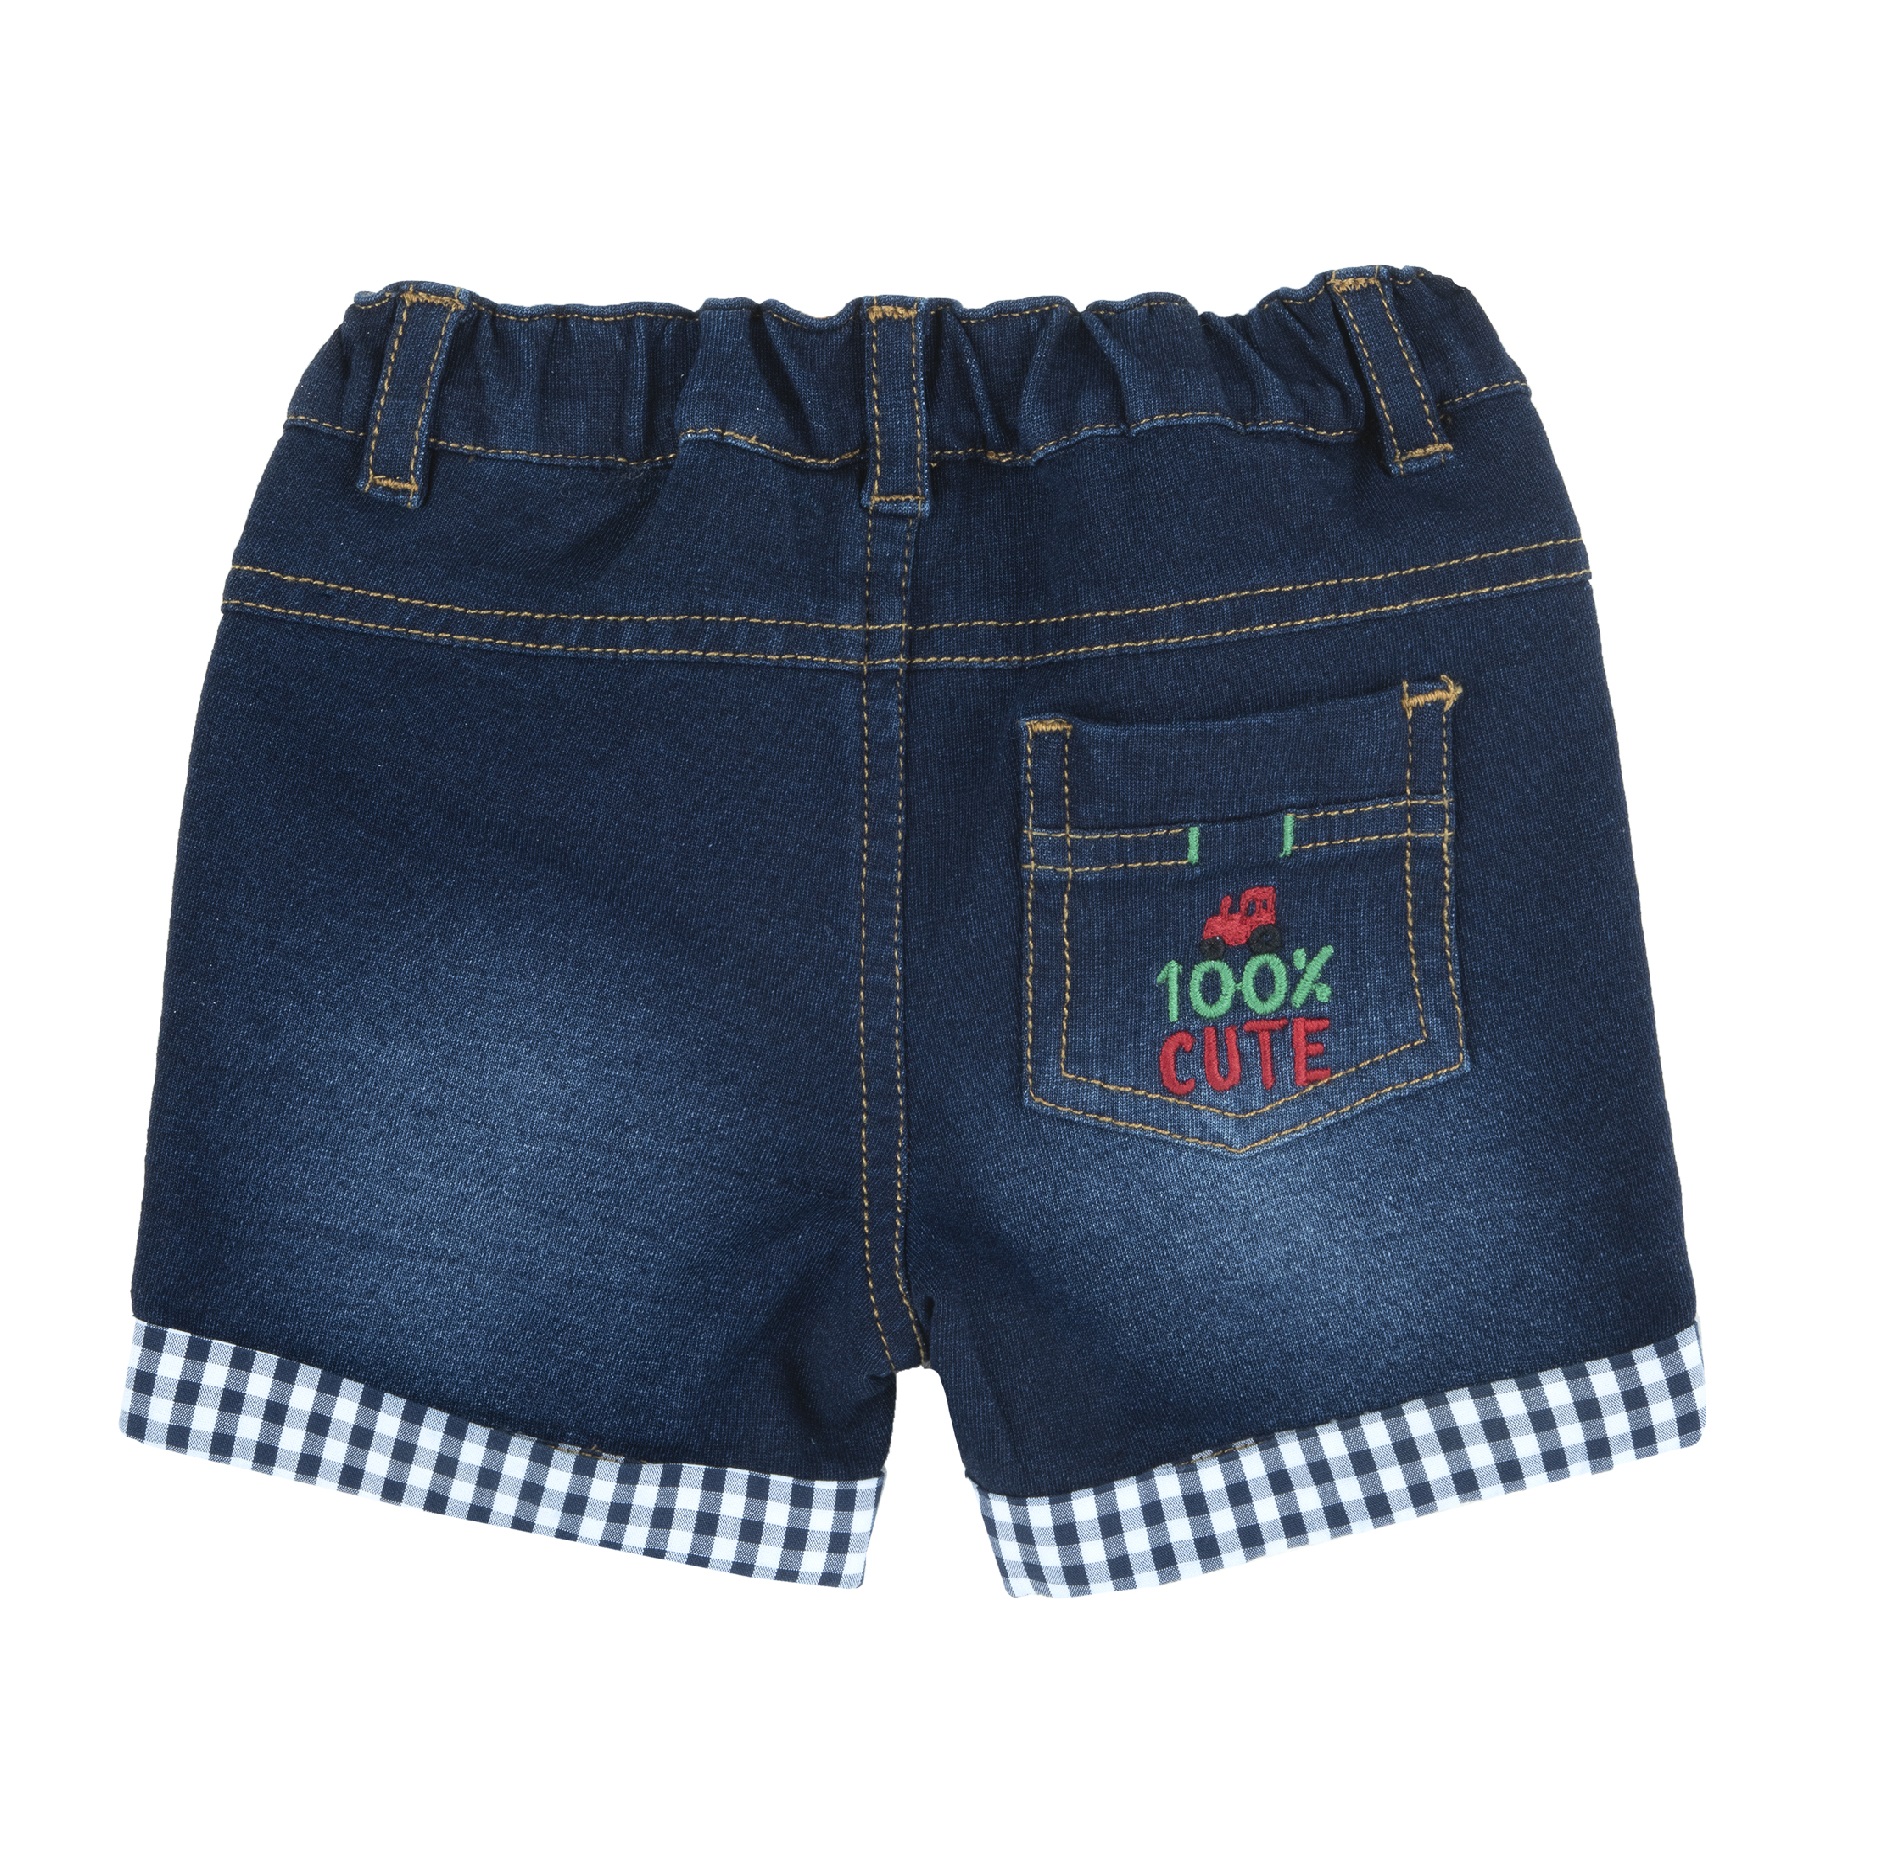 Pantaloni scurti copii Chicco, albastru, 00455 00455